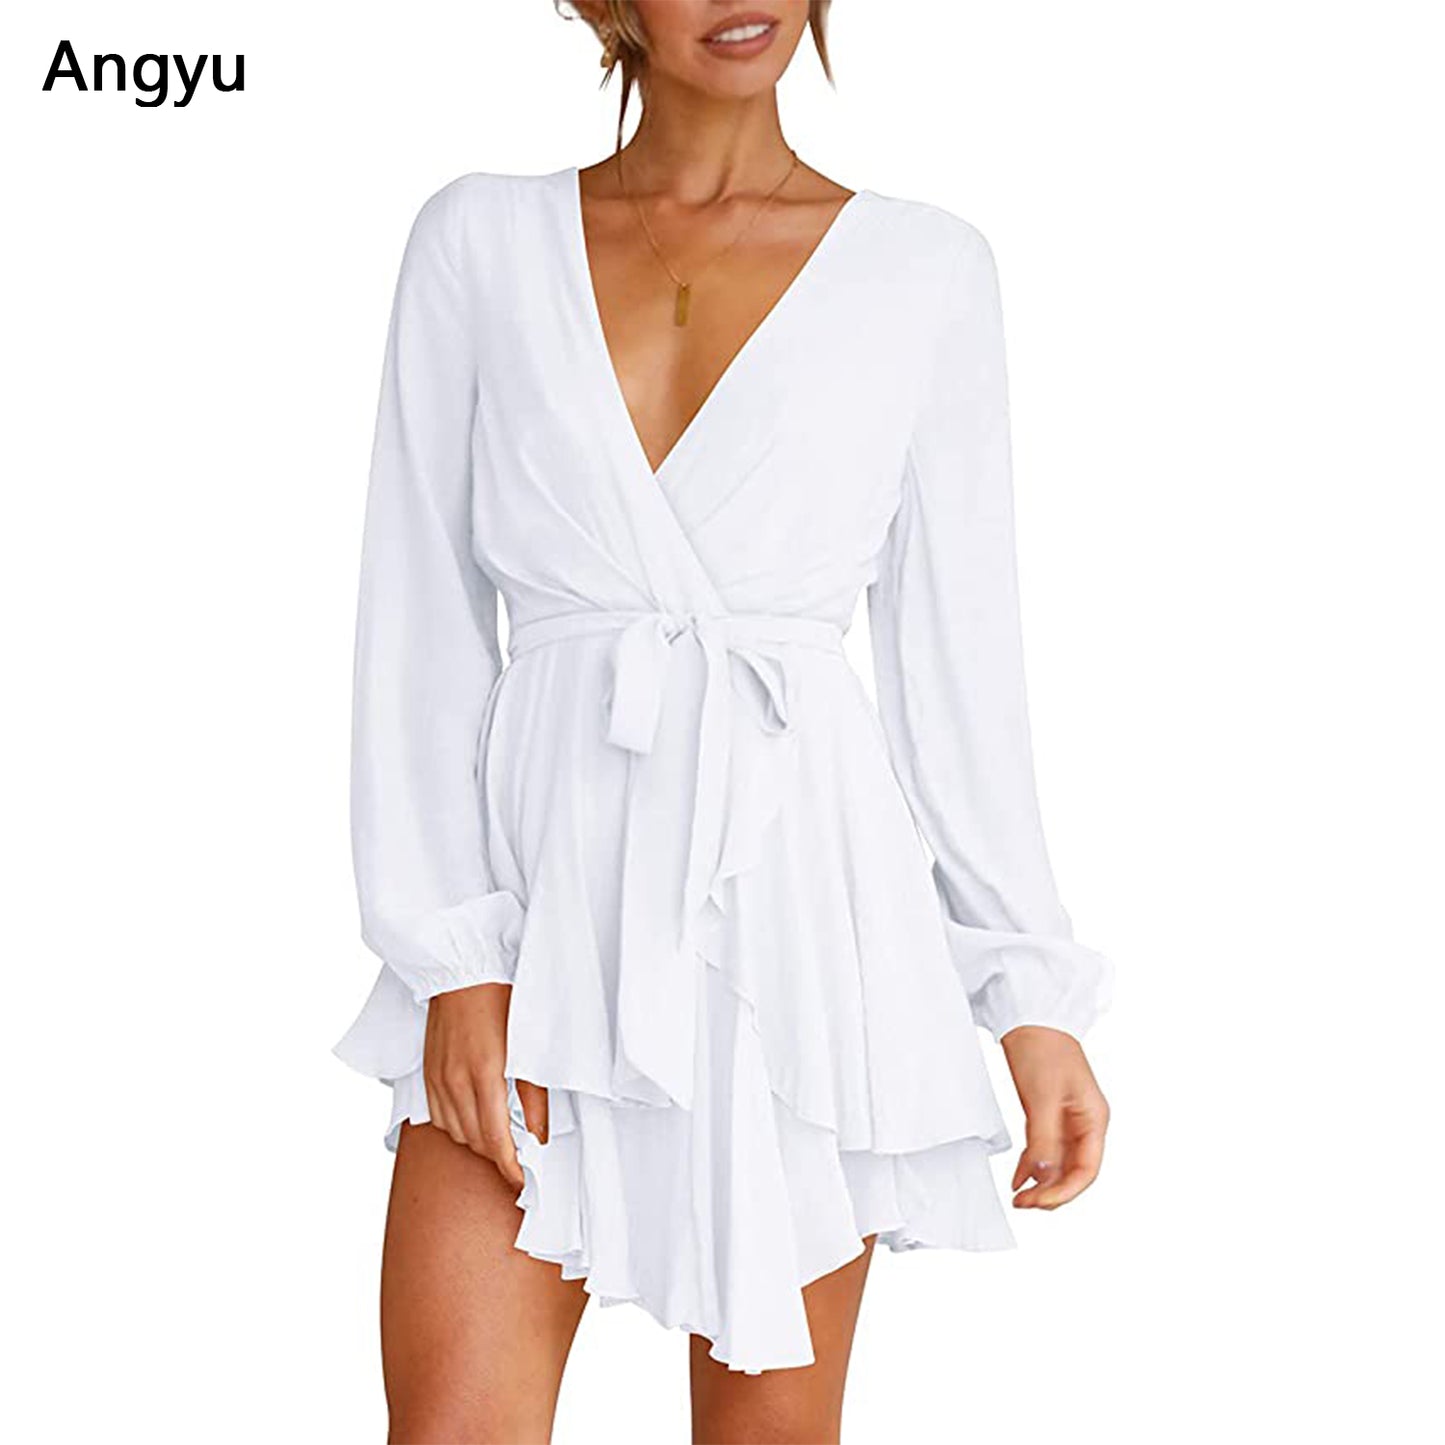 Angyu Women's Dress Deep V-Neck Long Sleeve